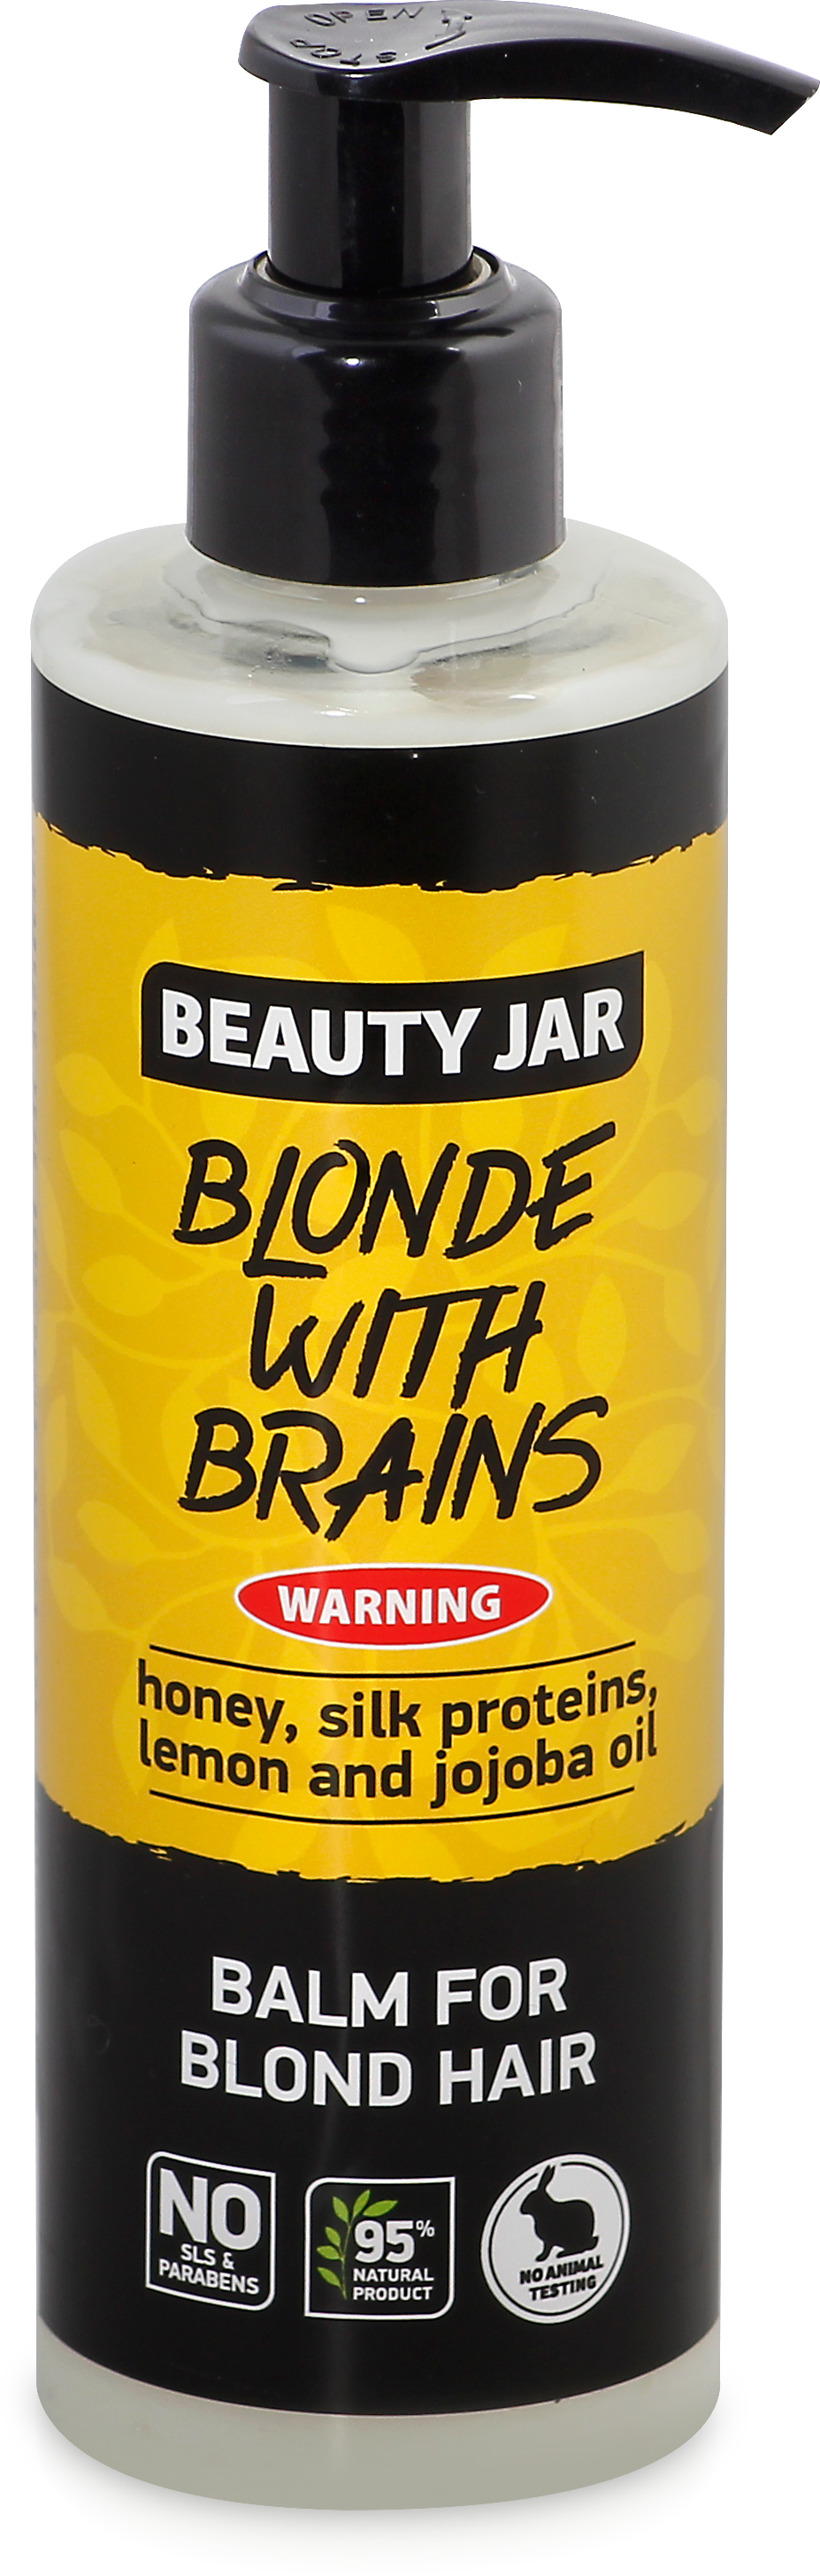 Бальзам Beauty Jar Blonde with brains, 250 мл - фото 1